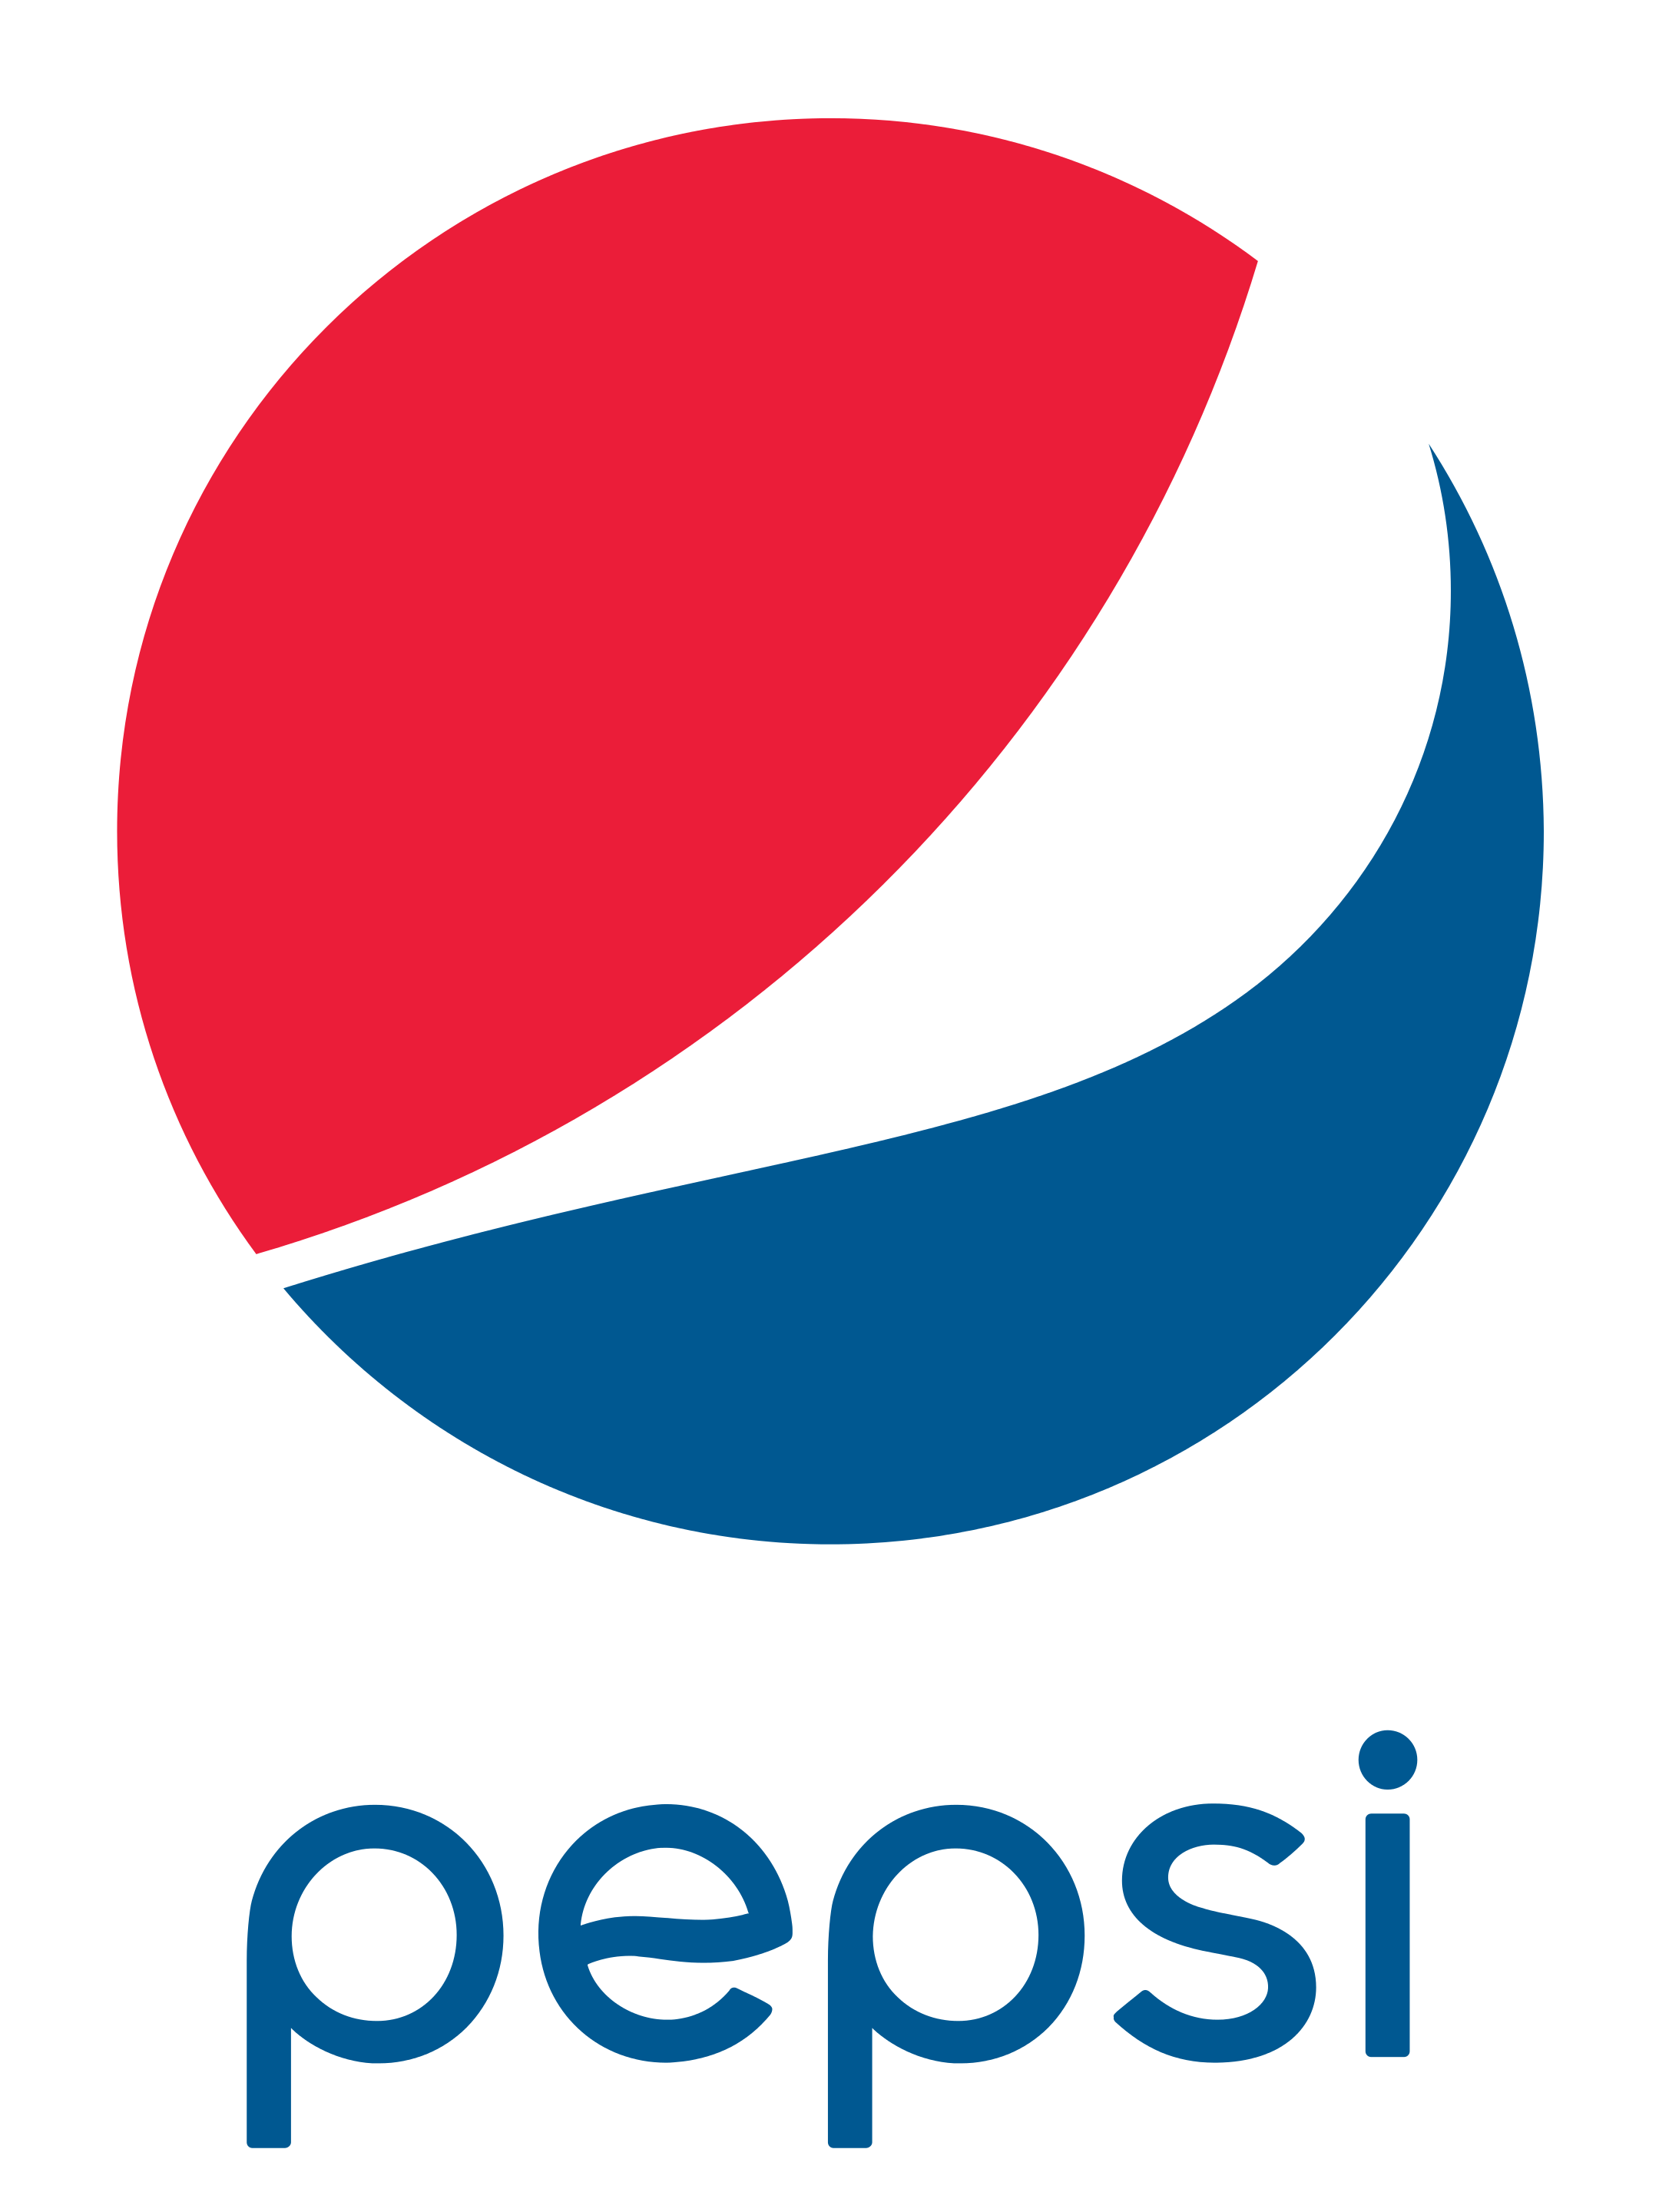 Pepsi Logo: Recognizable emblem of the Pepsi brand